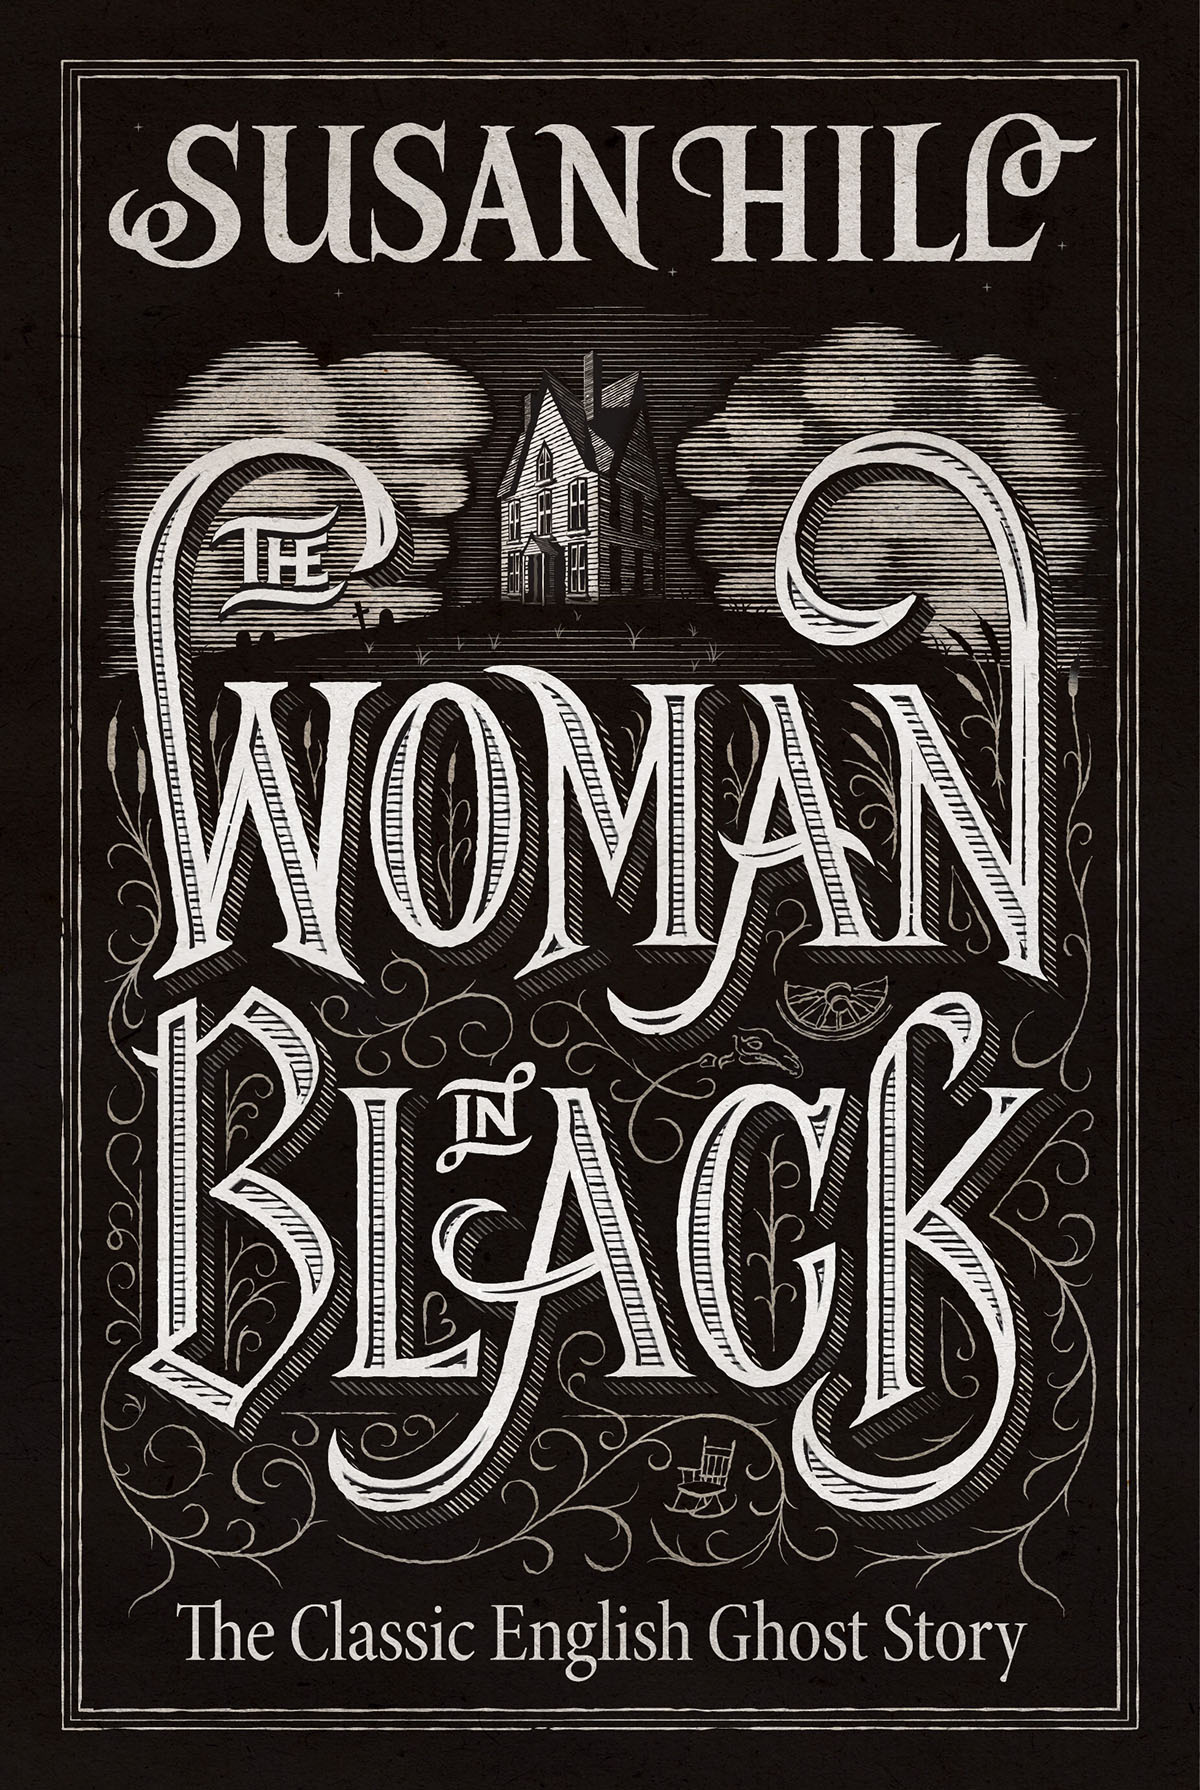 The Woman in Black alternative book cover design illustration | Jamie Clarke Type